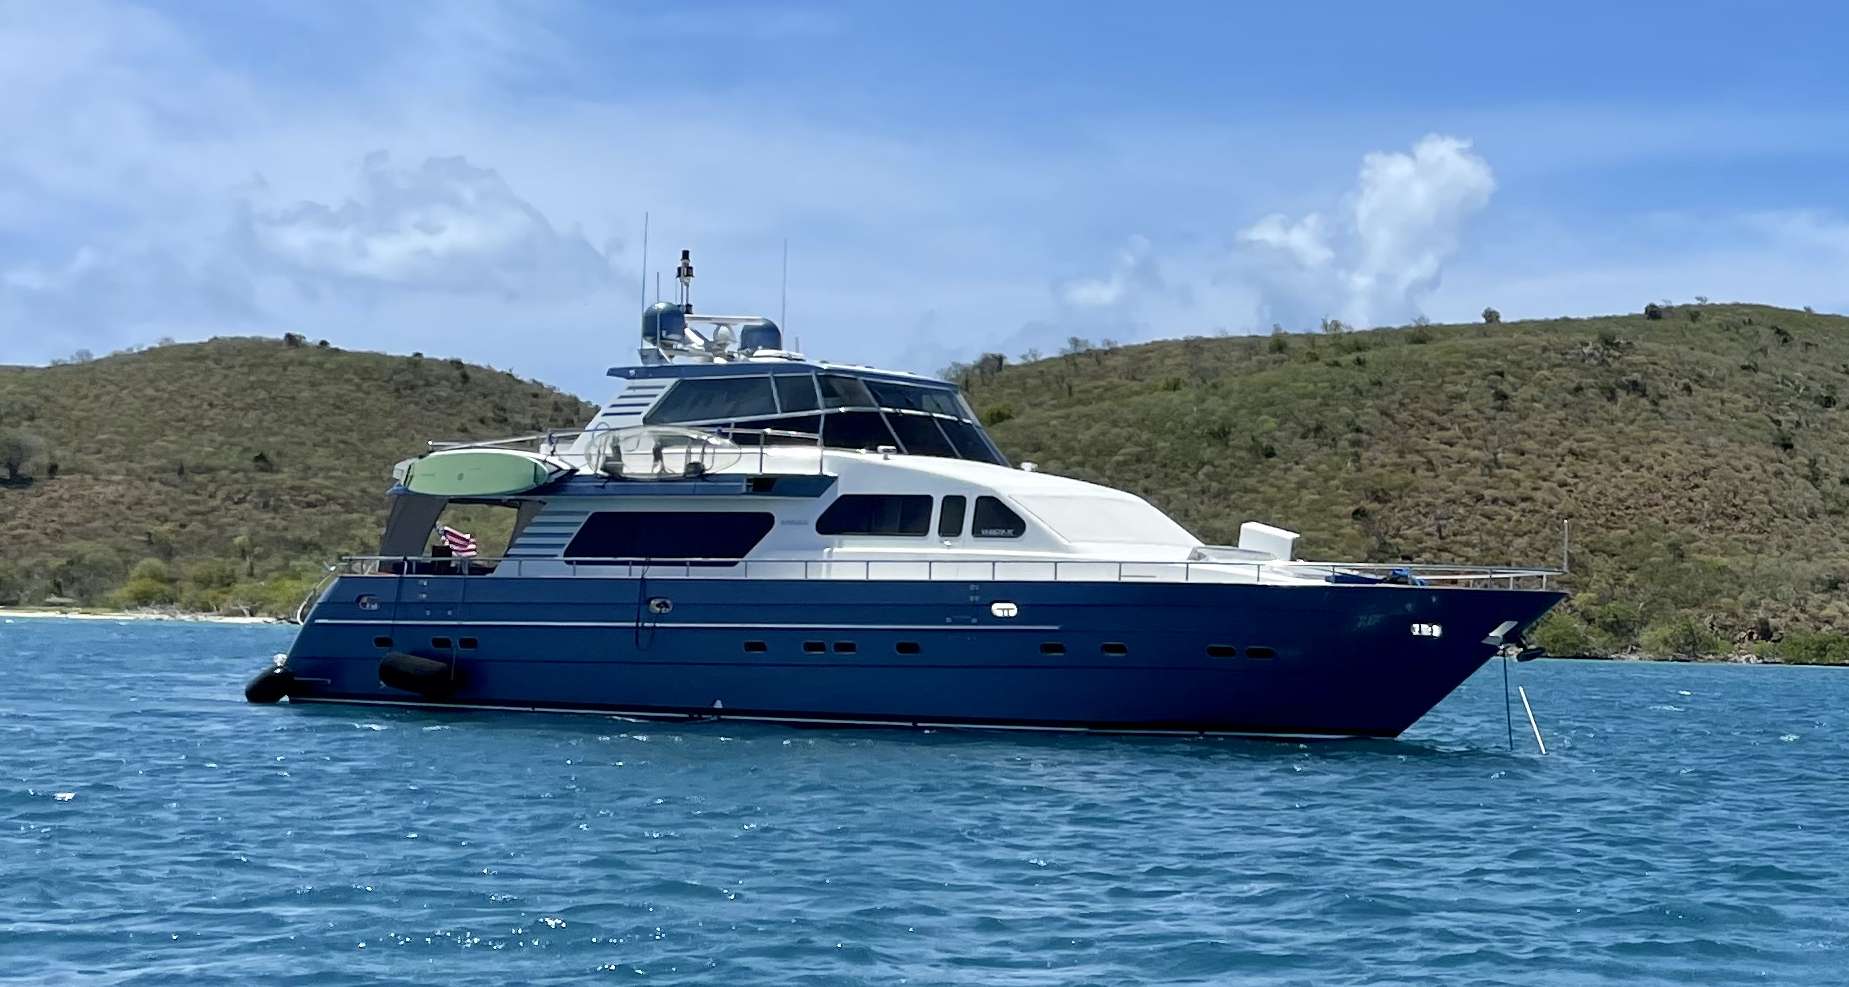 QARA - Motor Boat Charter British Virgin Islands & Boat hire in Caribbean Virgin Islands 1